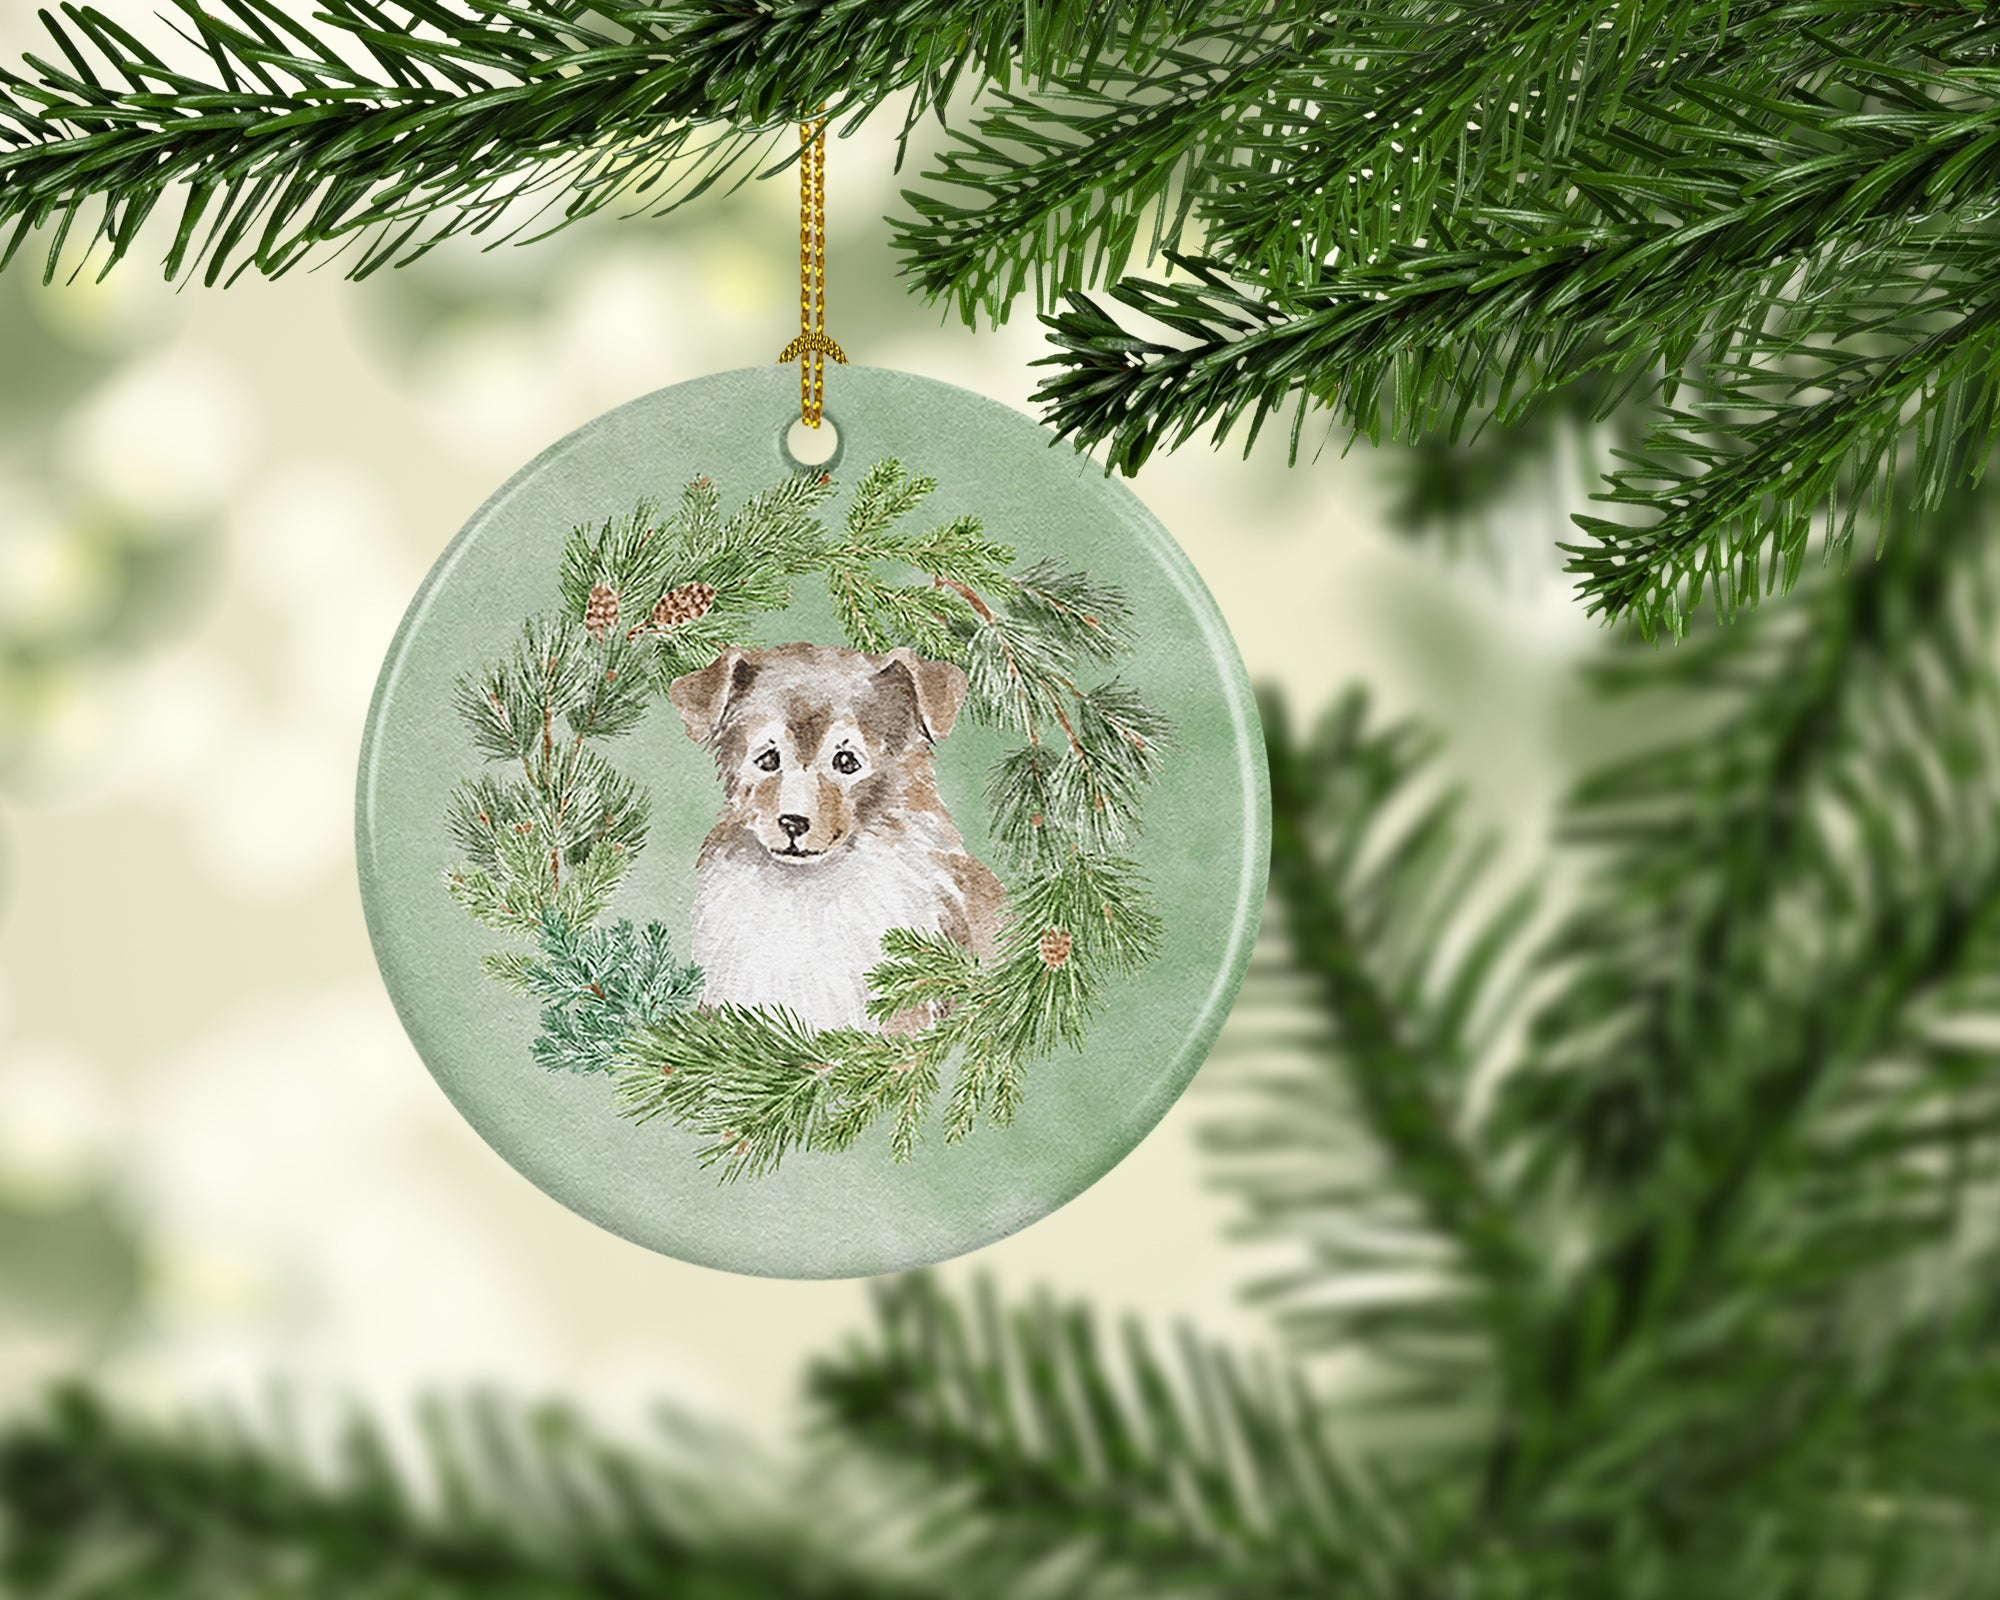 Buy this Sheltie/Shetland Sheepdog Puppy Sable Smile Christmas Wreath Ceramic Ornament